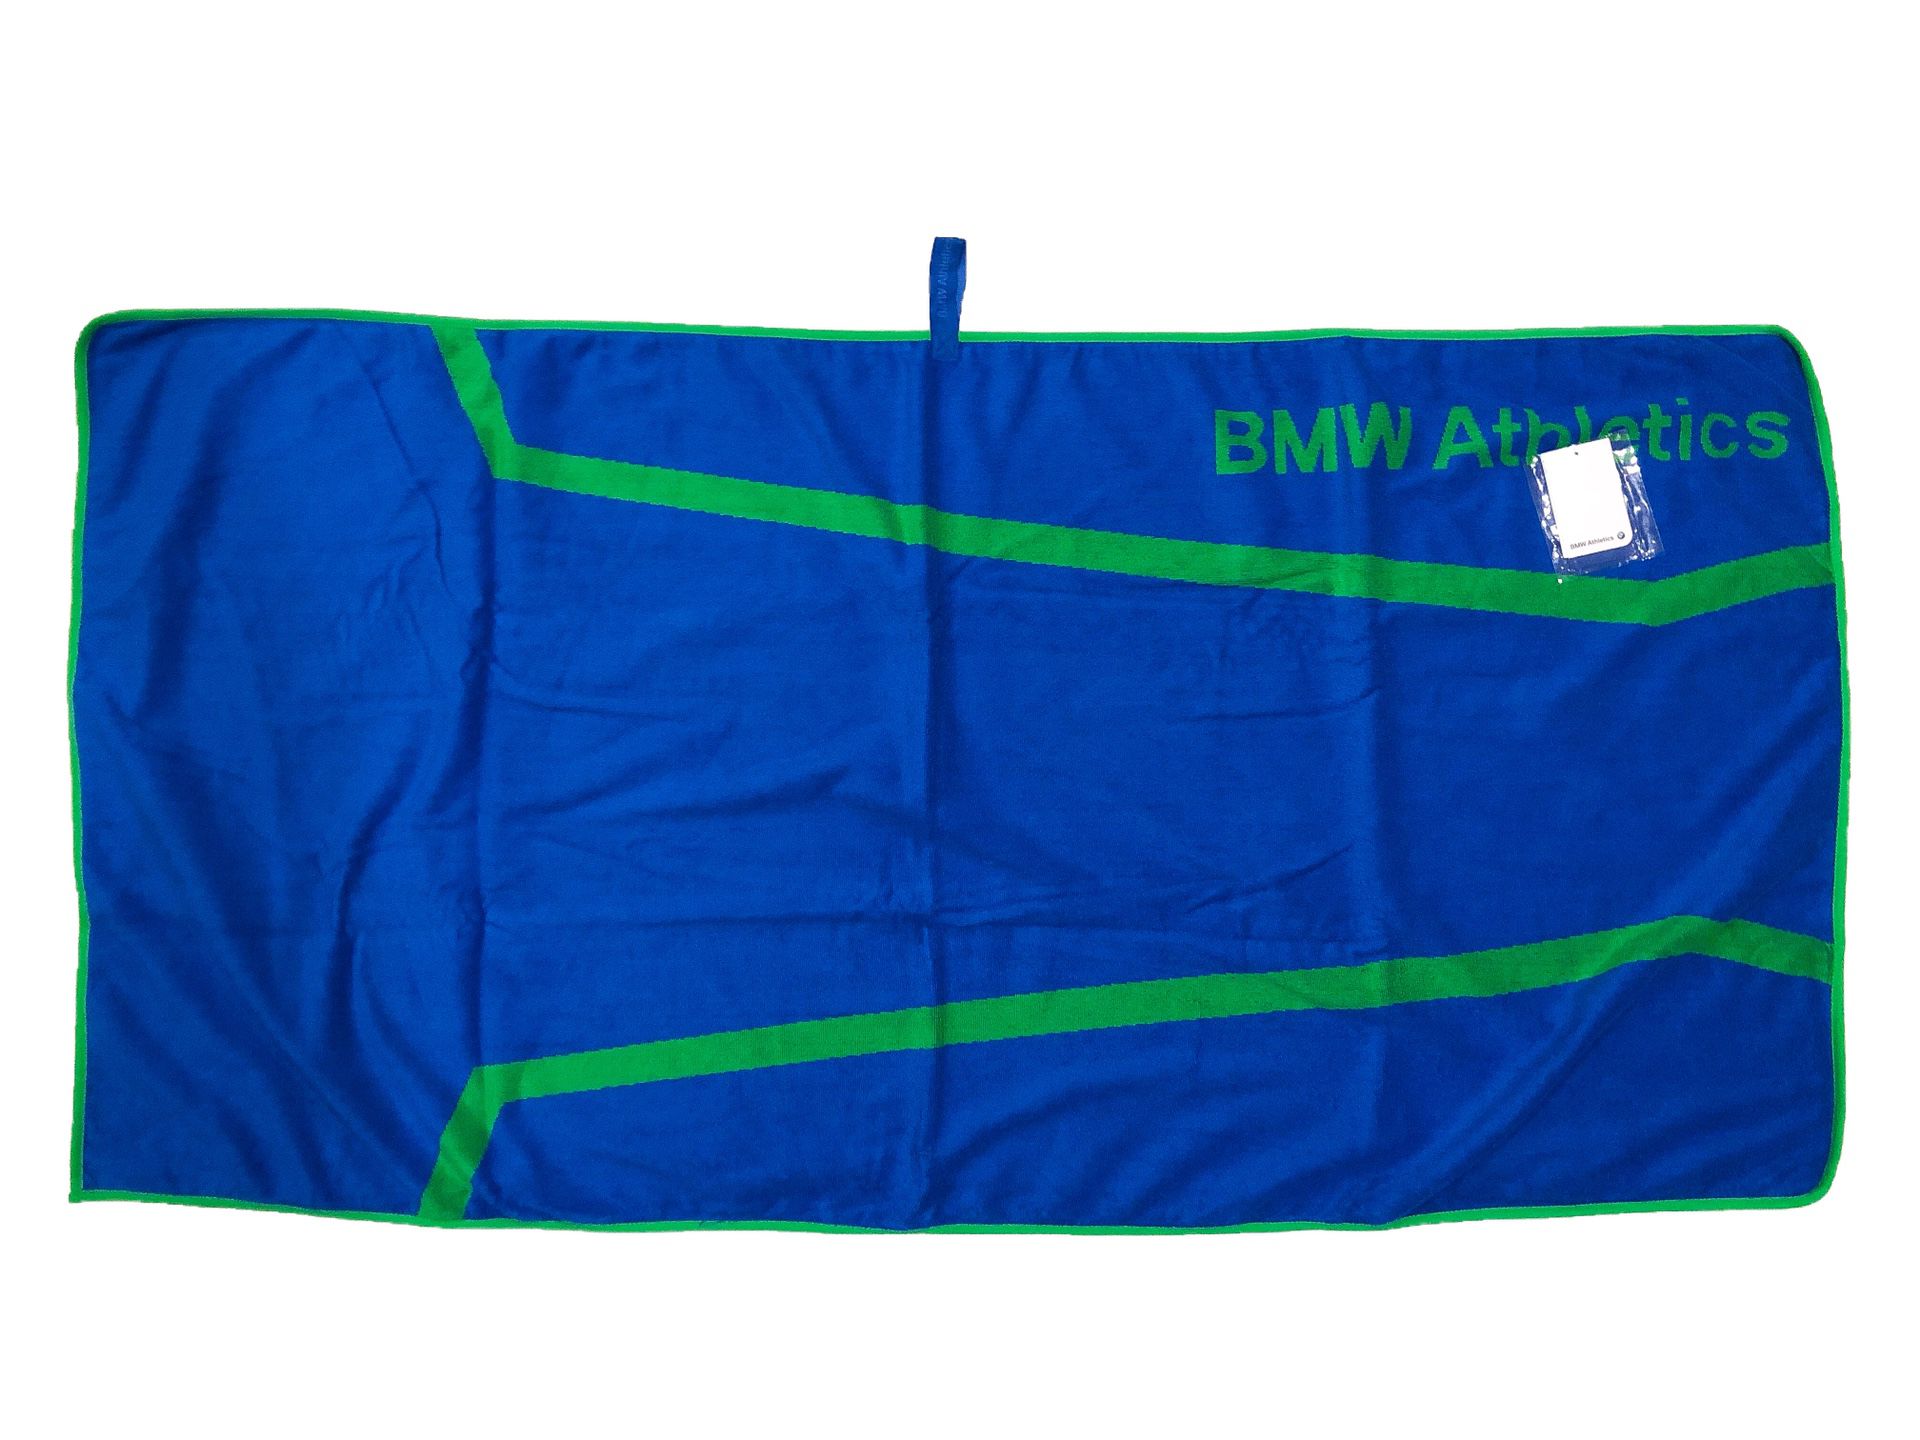 BMW Athletics Sports Training Gym Towel Brand New NWT